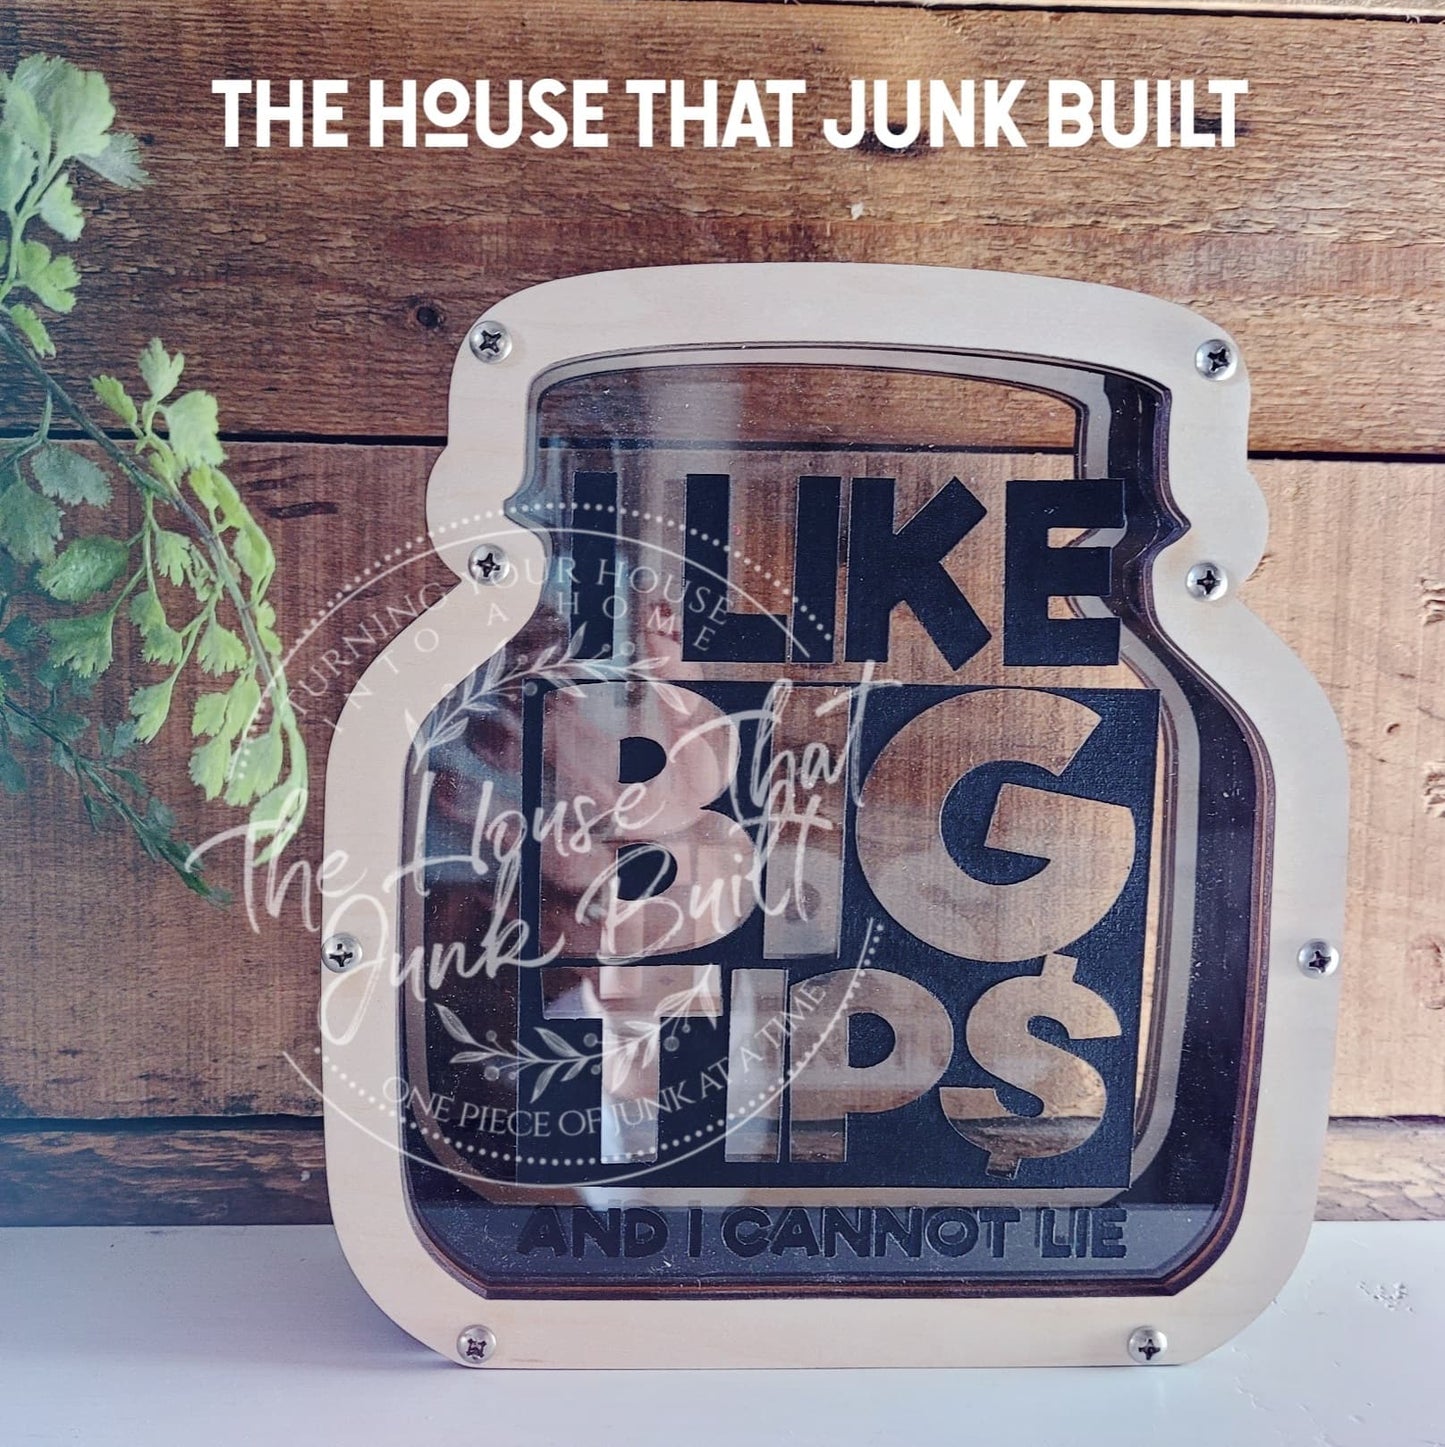 Tip Jar "I Like Big Tips"